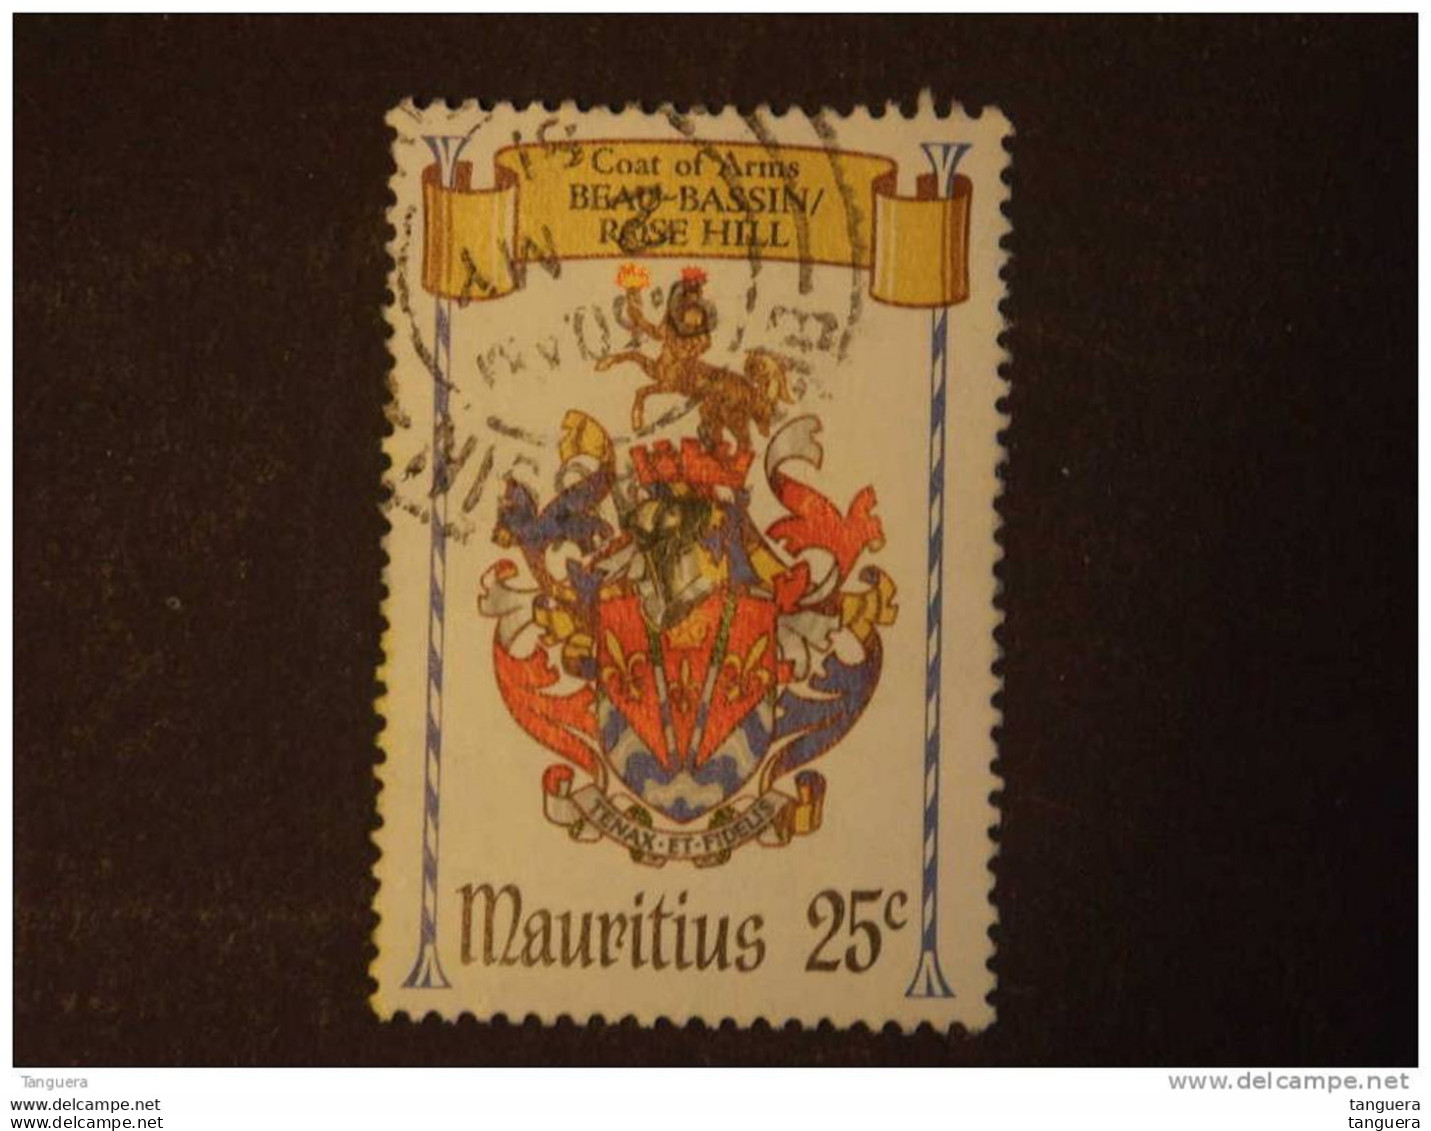 Mauritius Maurice 1981 Armoiries Des Villes Wapenschild Beau-Bassin/Rose Hill Yv 523 O - Mauritius (1968-...)